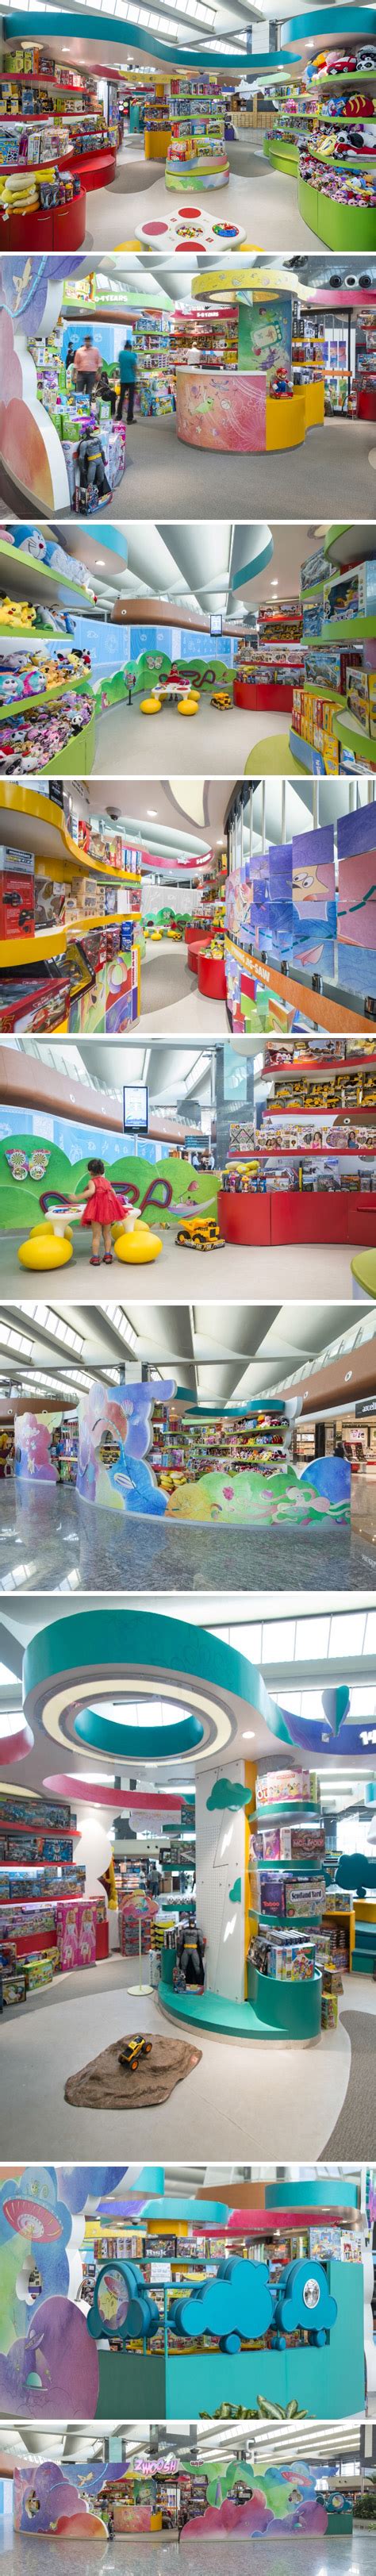 Zwoosh Kids Store By Foley Designs Bangalore India